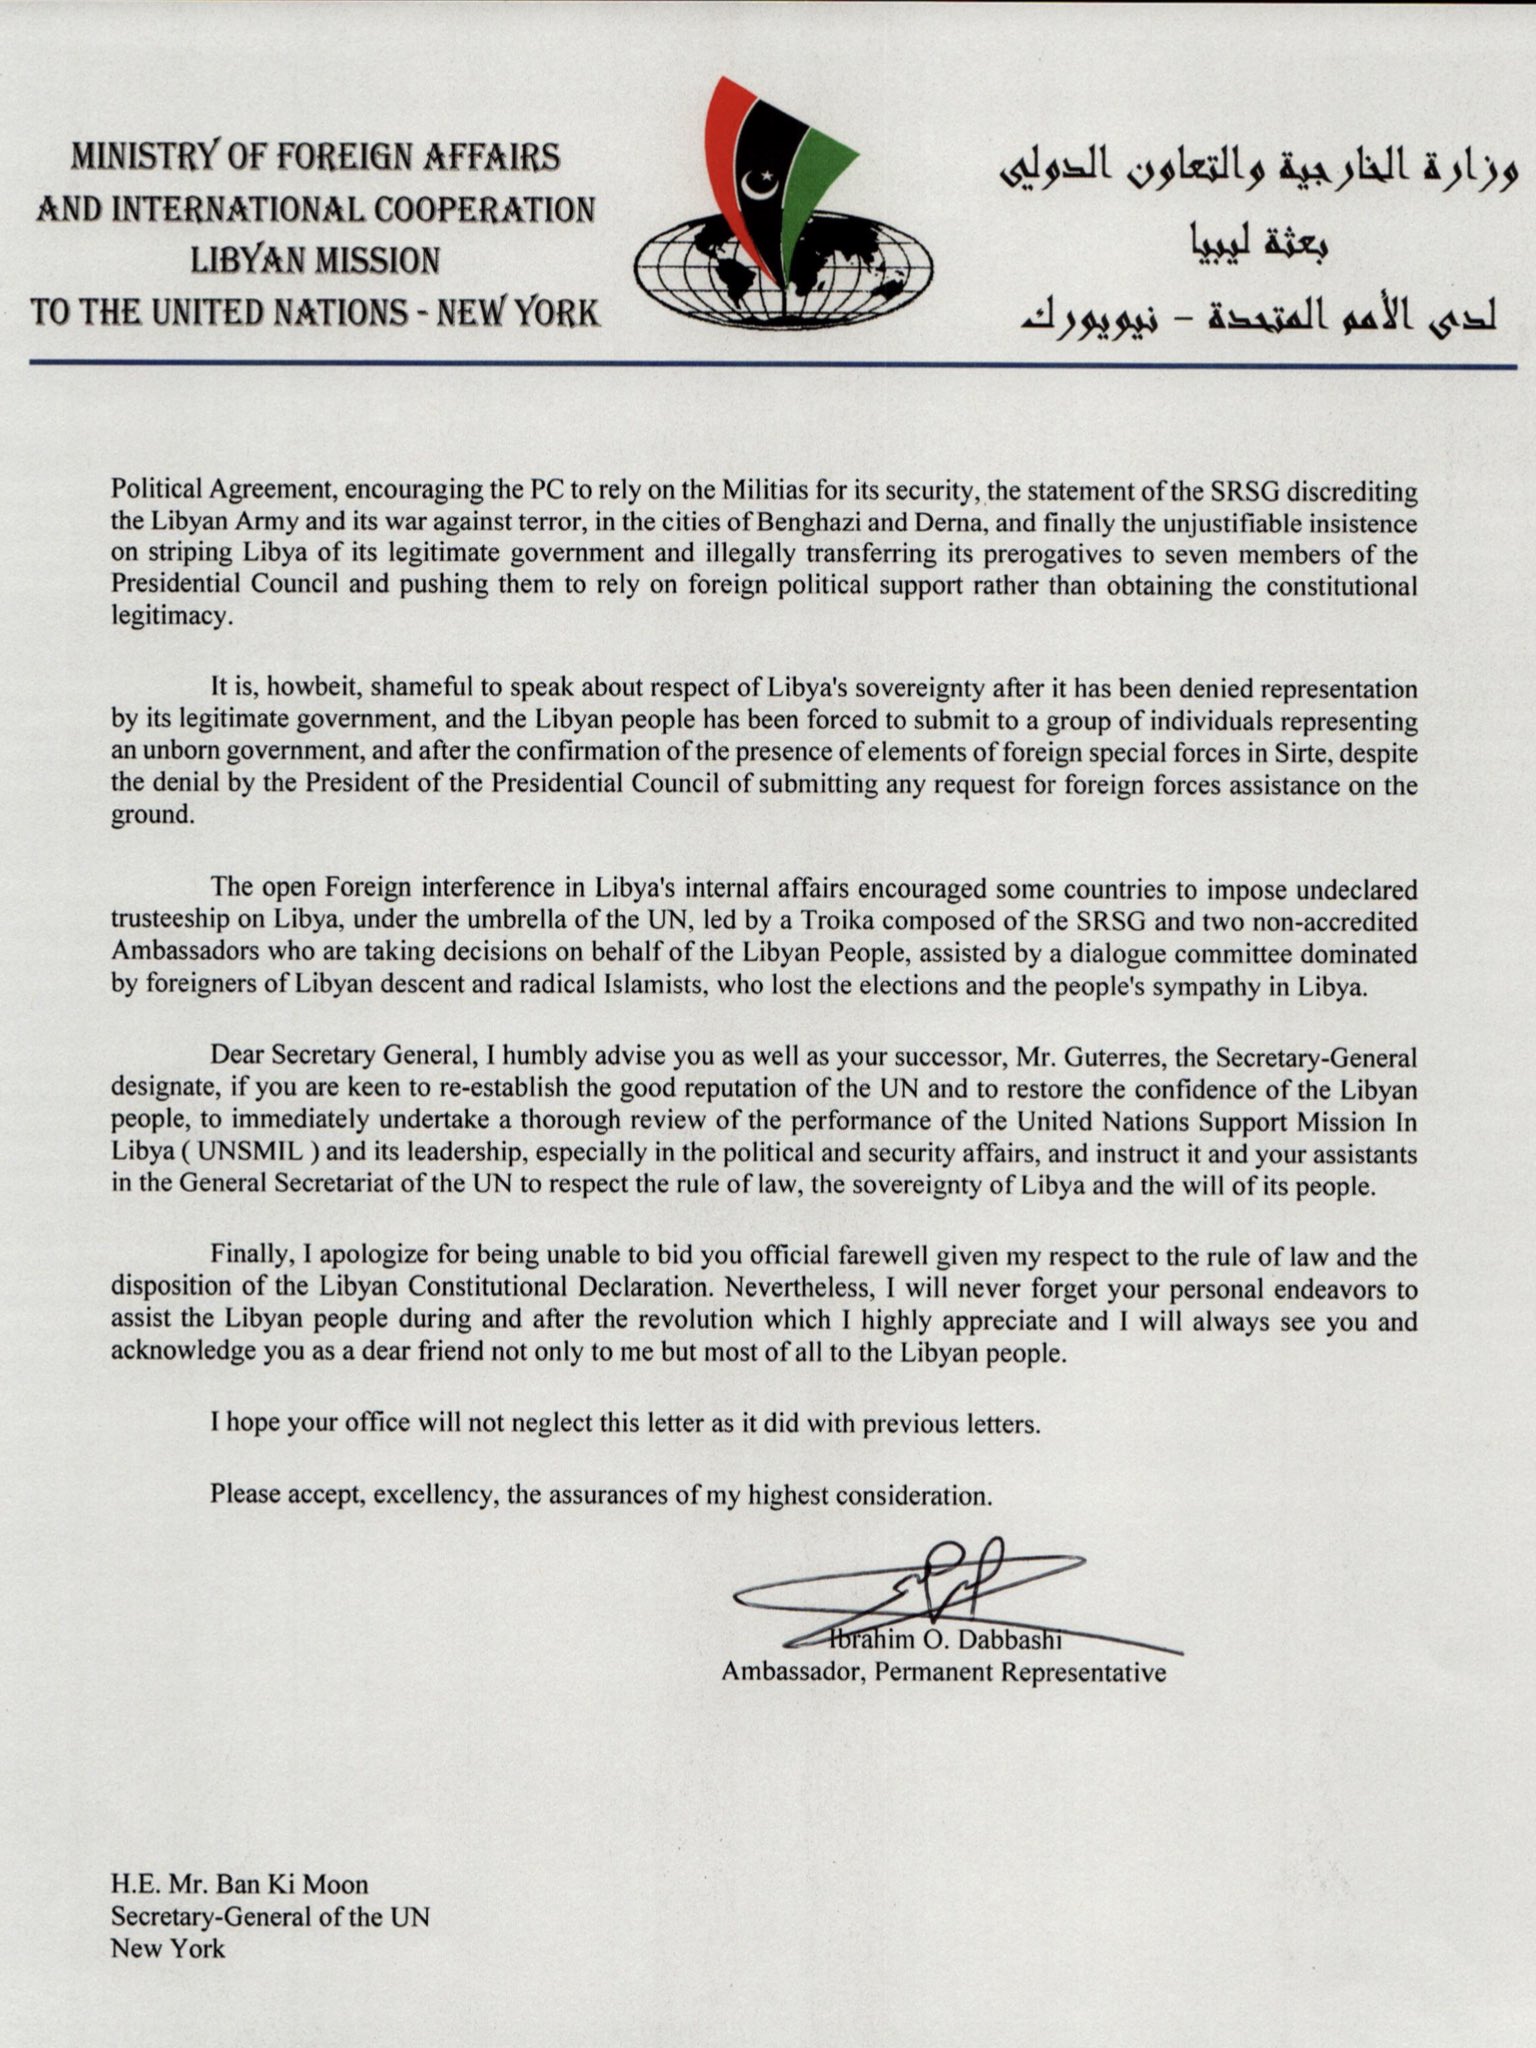 Ibrahim O Dabbashi My Farewell Letter To Mr Ban Ki Moon The Un Secretary General